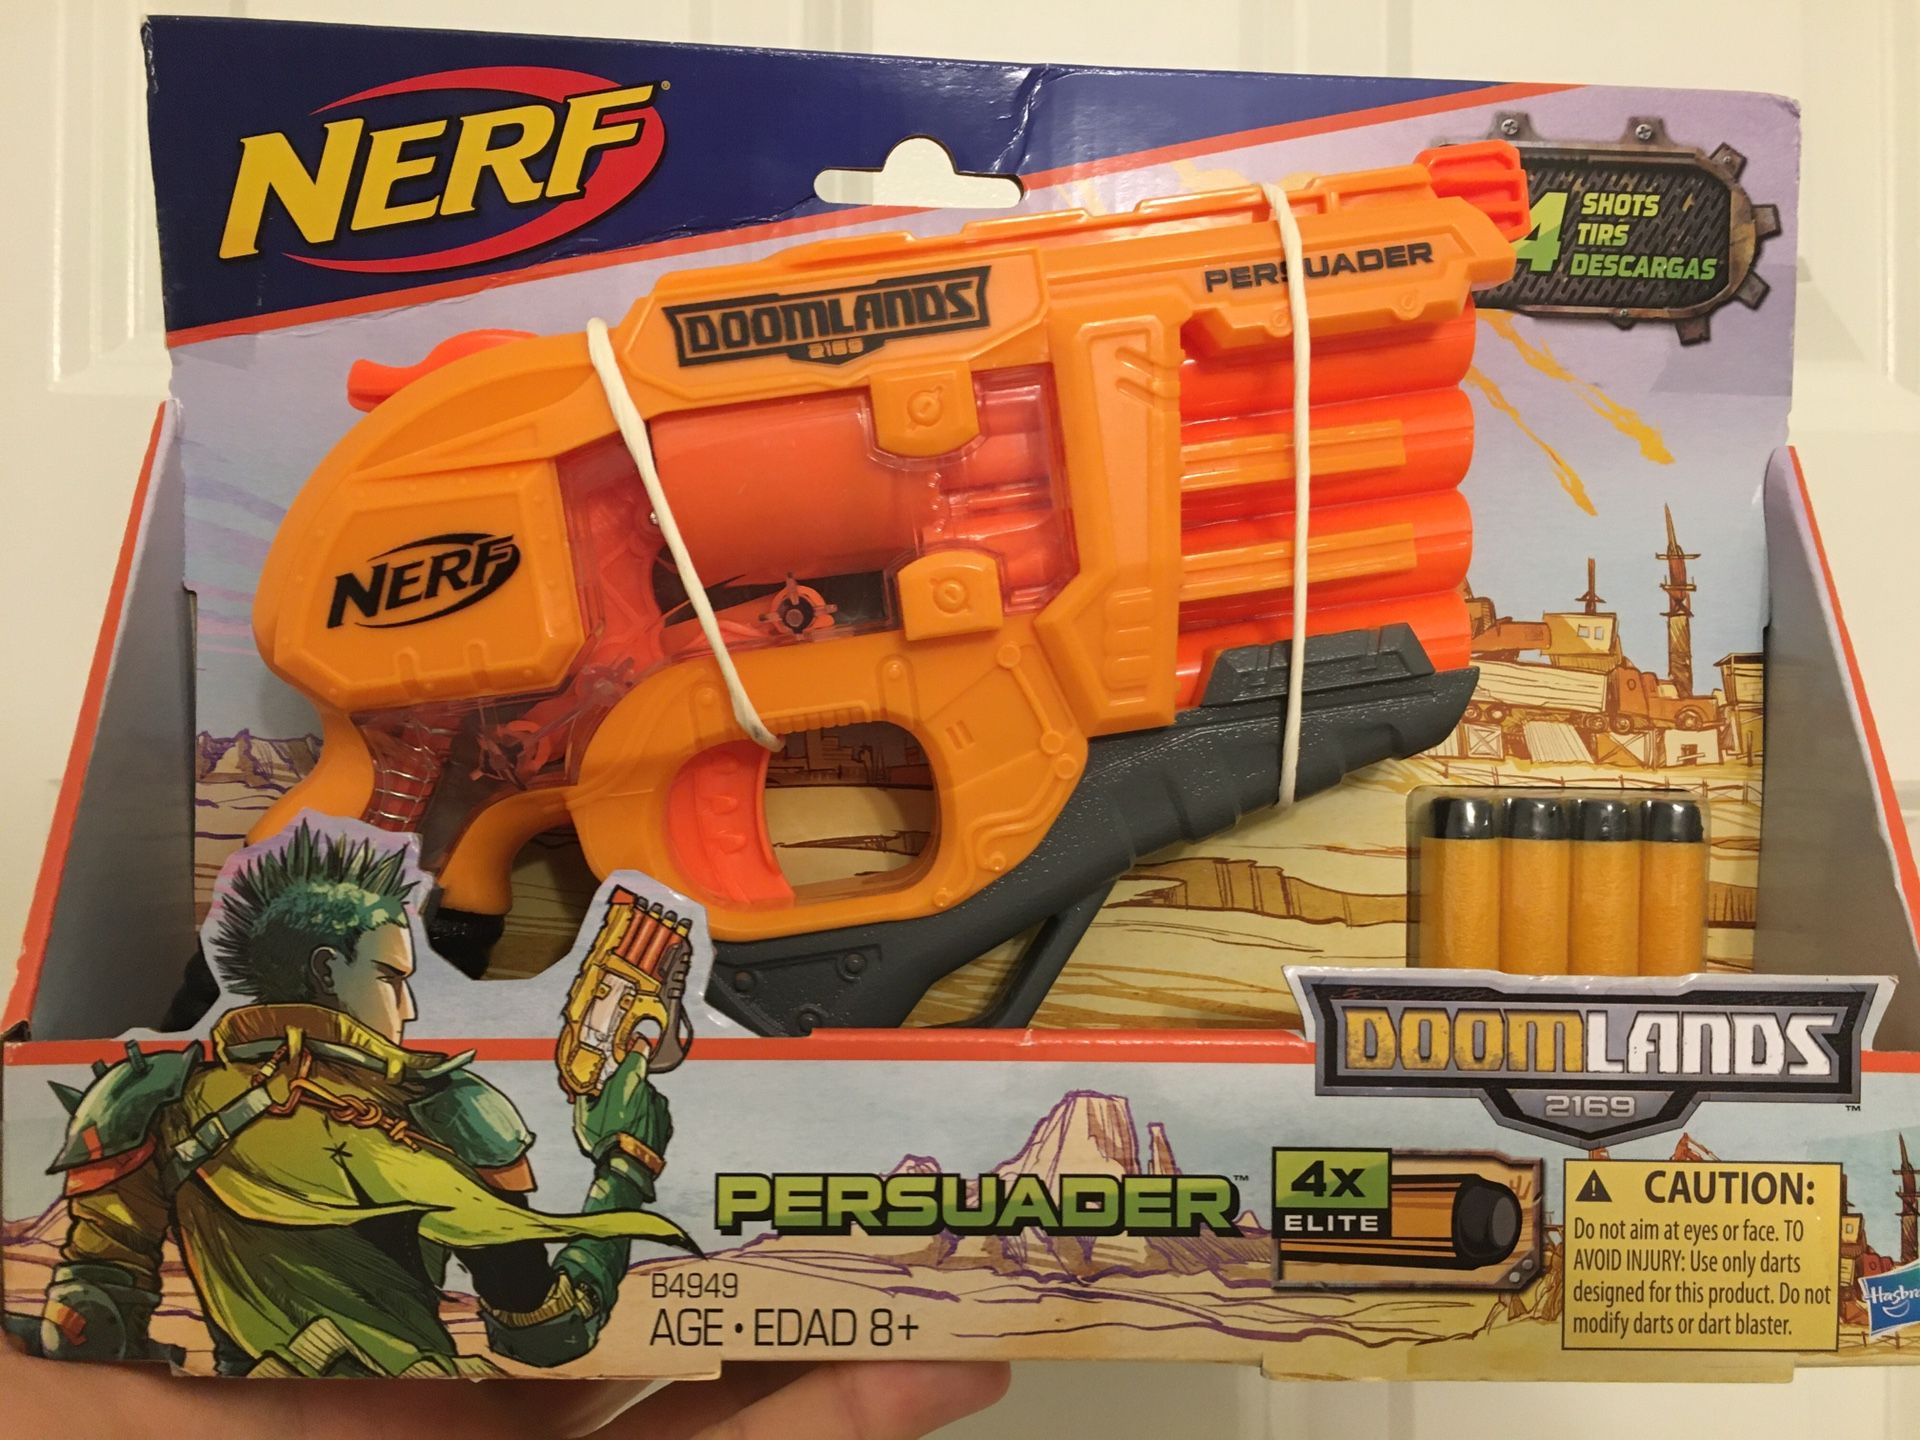 Nerf Persuader Model 2169 DoomLands 4 Shot Toy Gun- Brand New Factory Sealed!